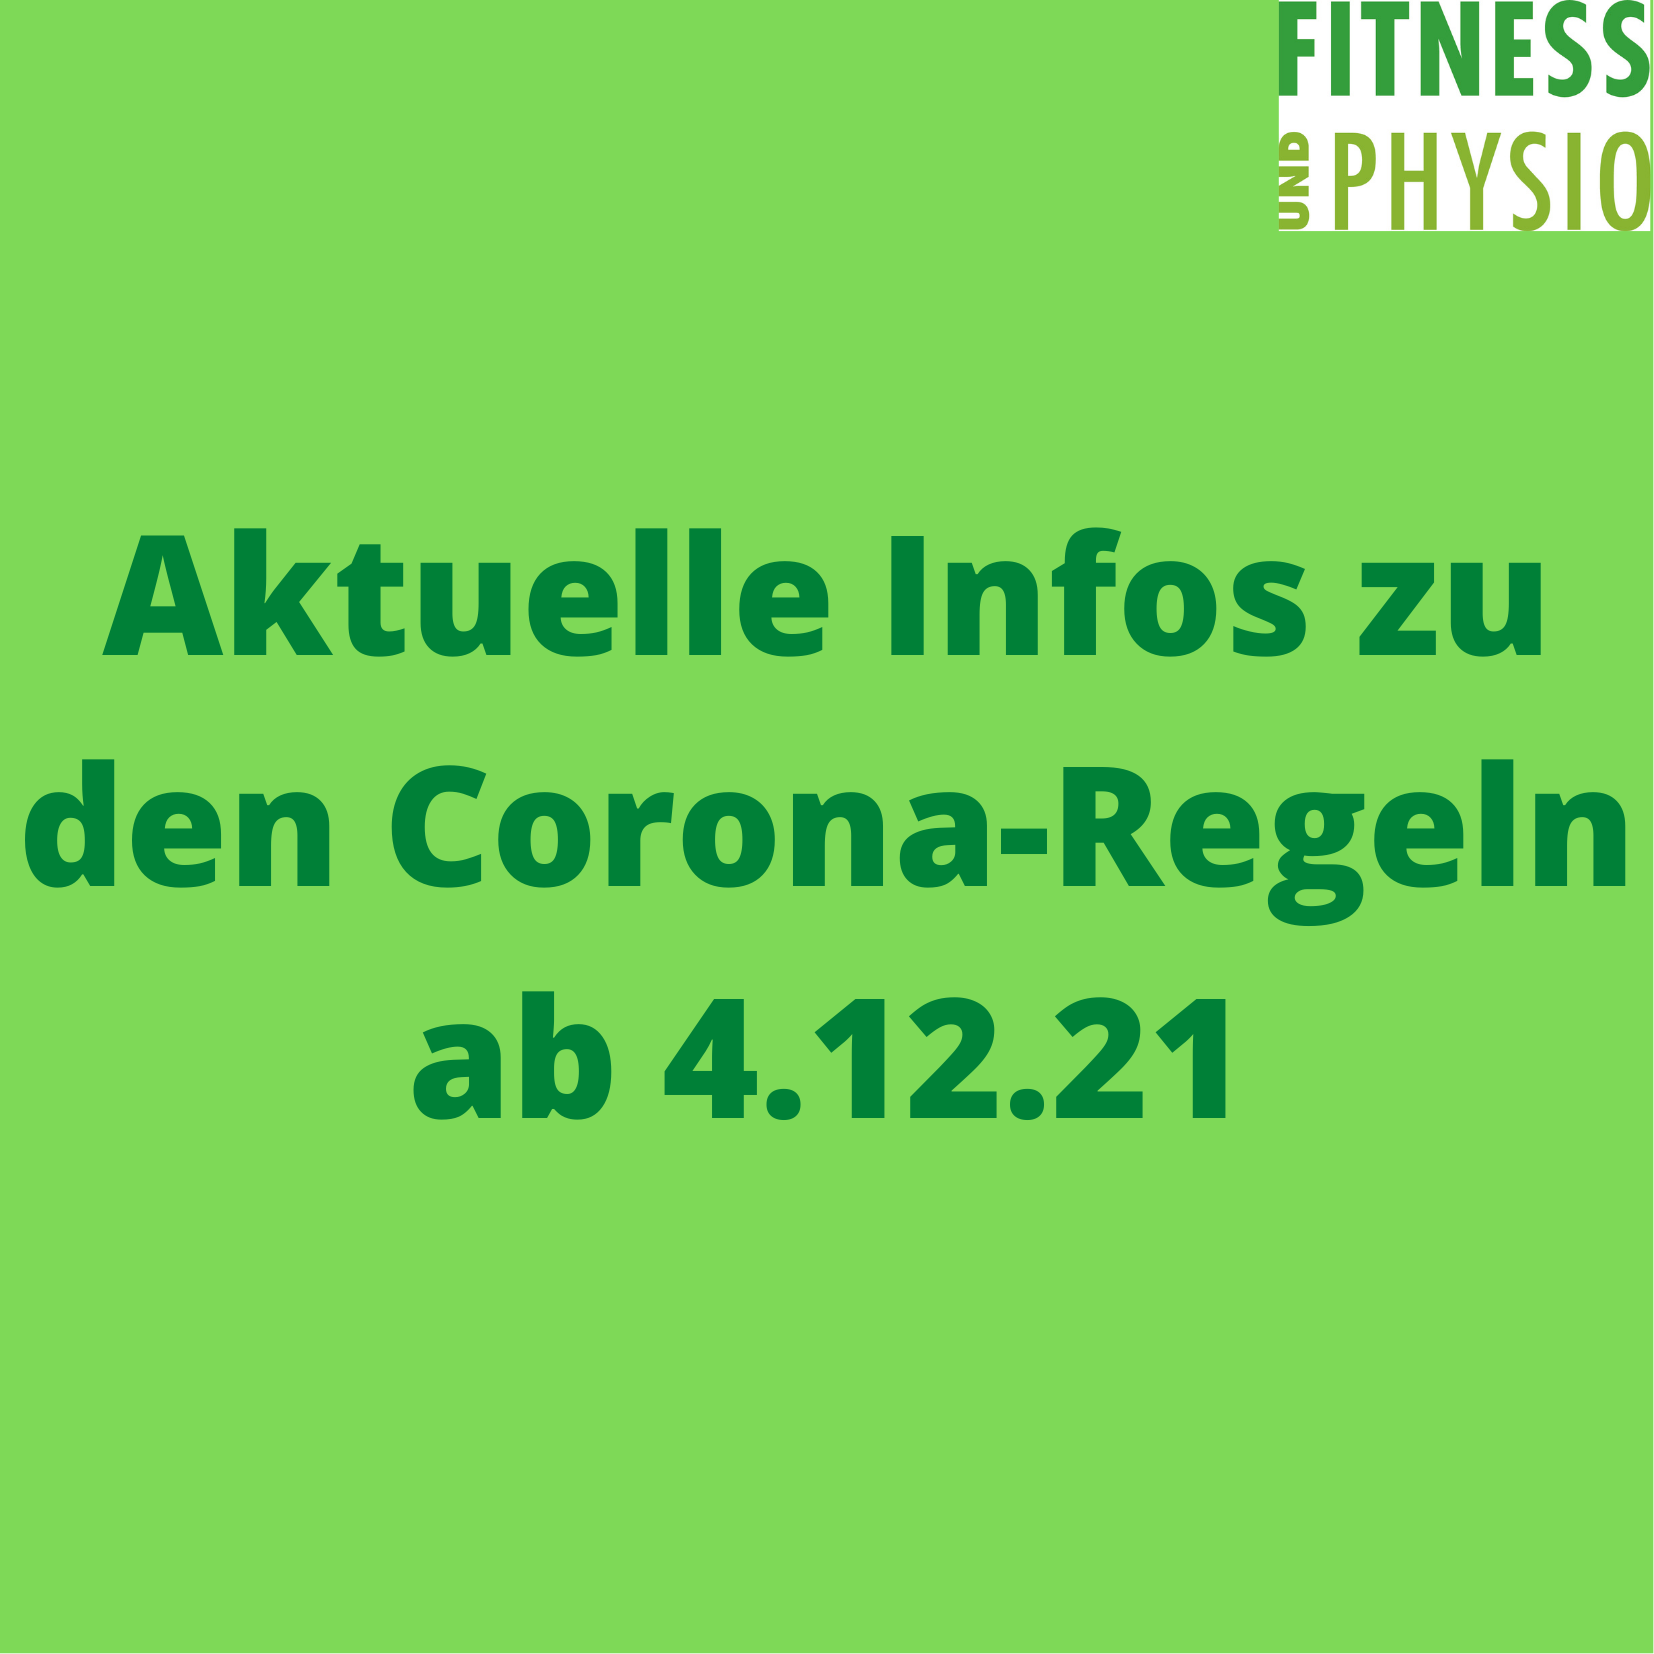 Aktuelle Infos zu den Corona-Regeln ab 4.12.21